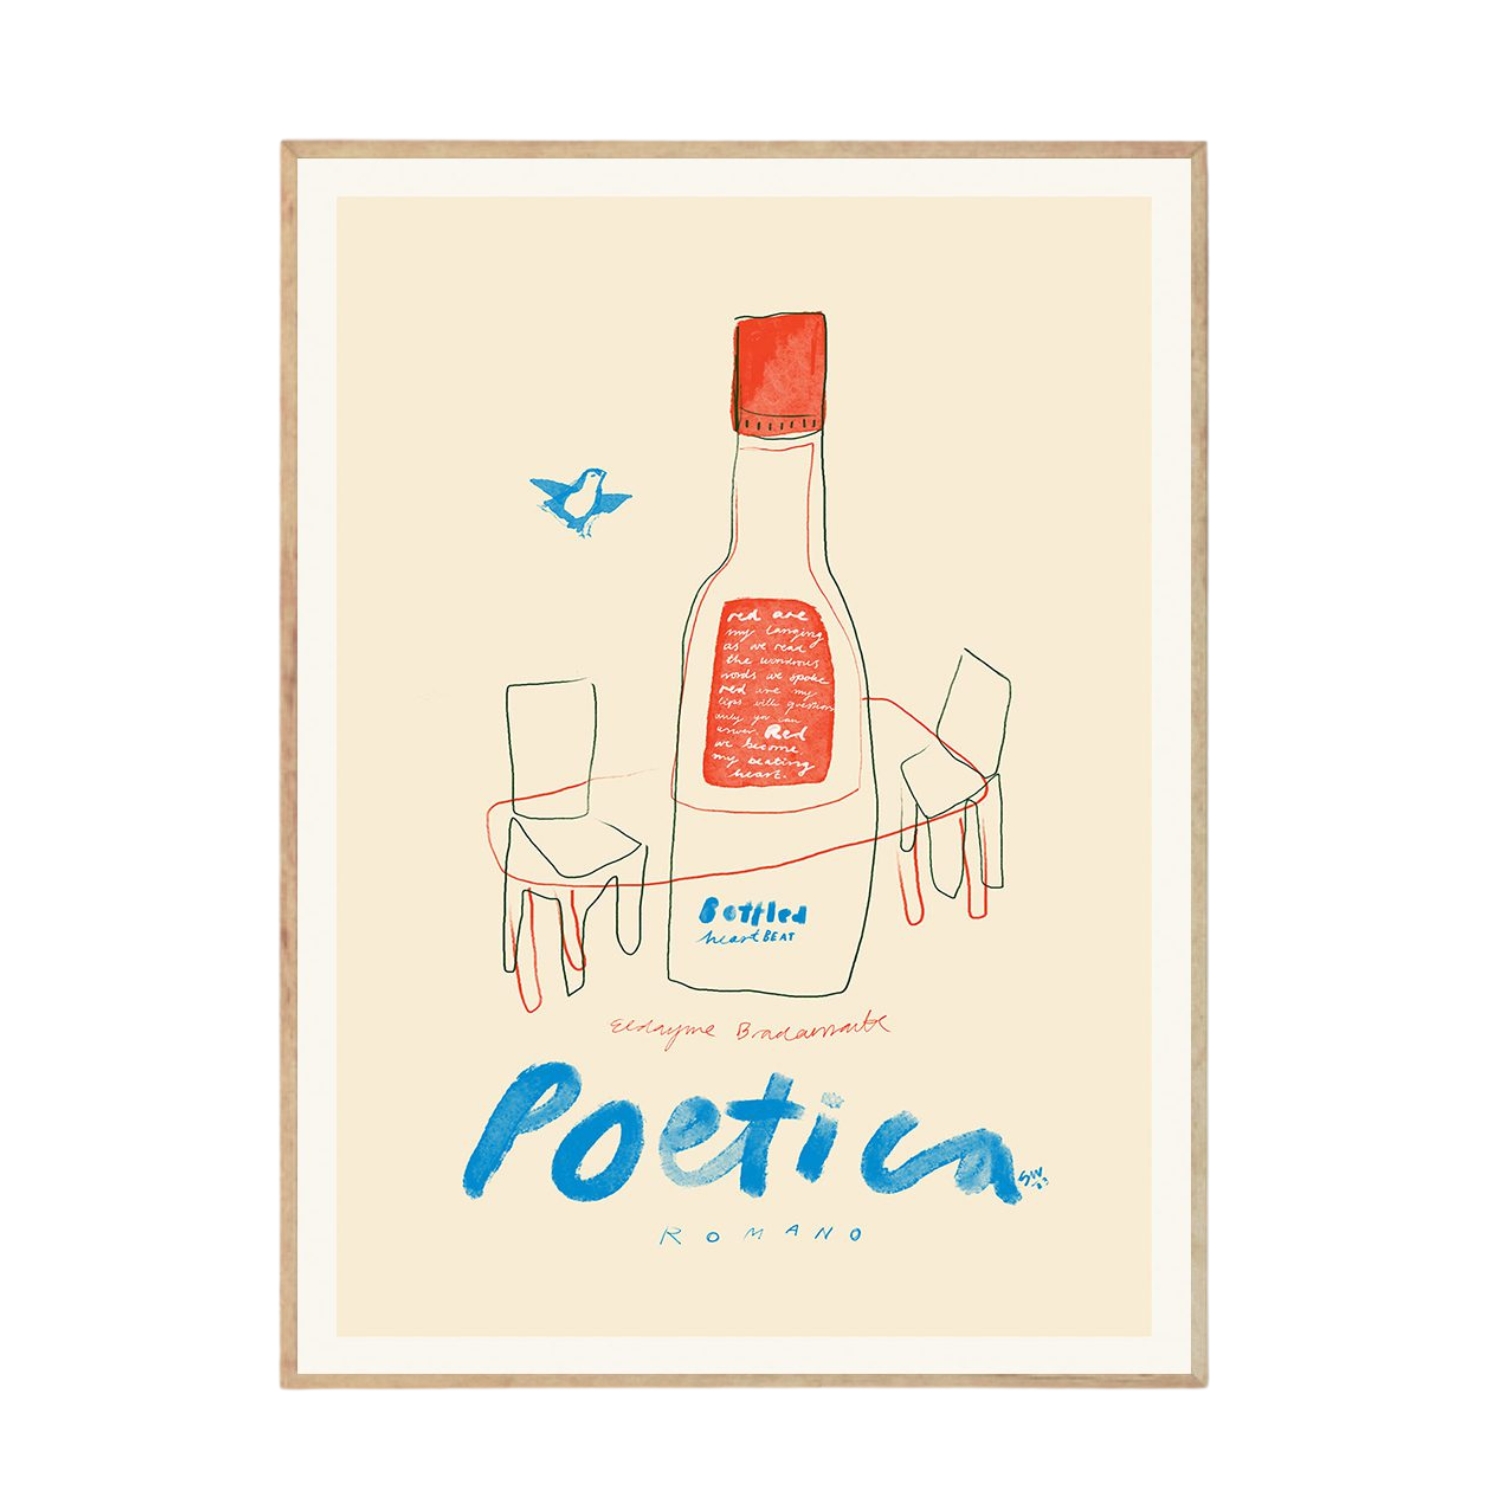 The Poster Club Poetica, Das Rotes Rabbit - 50x70cm